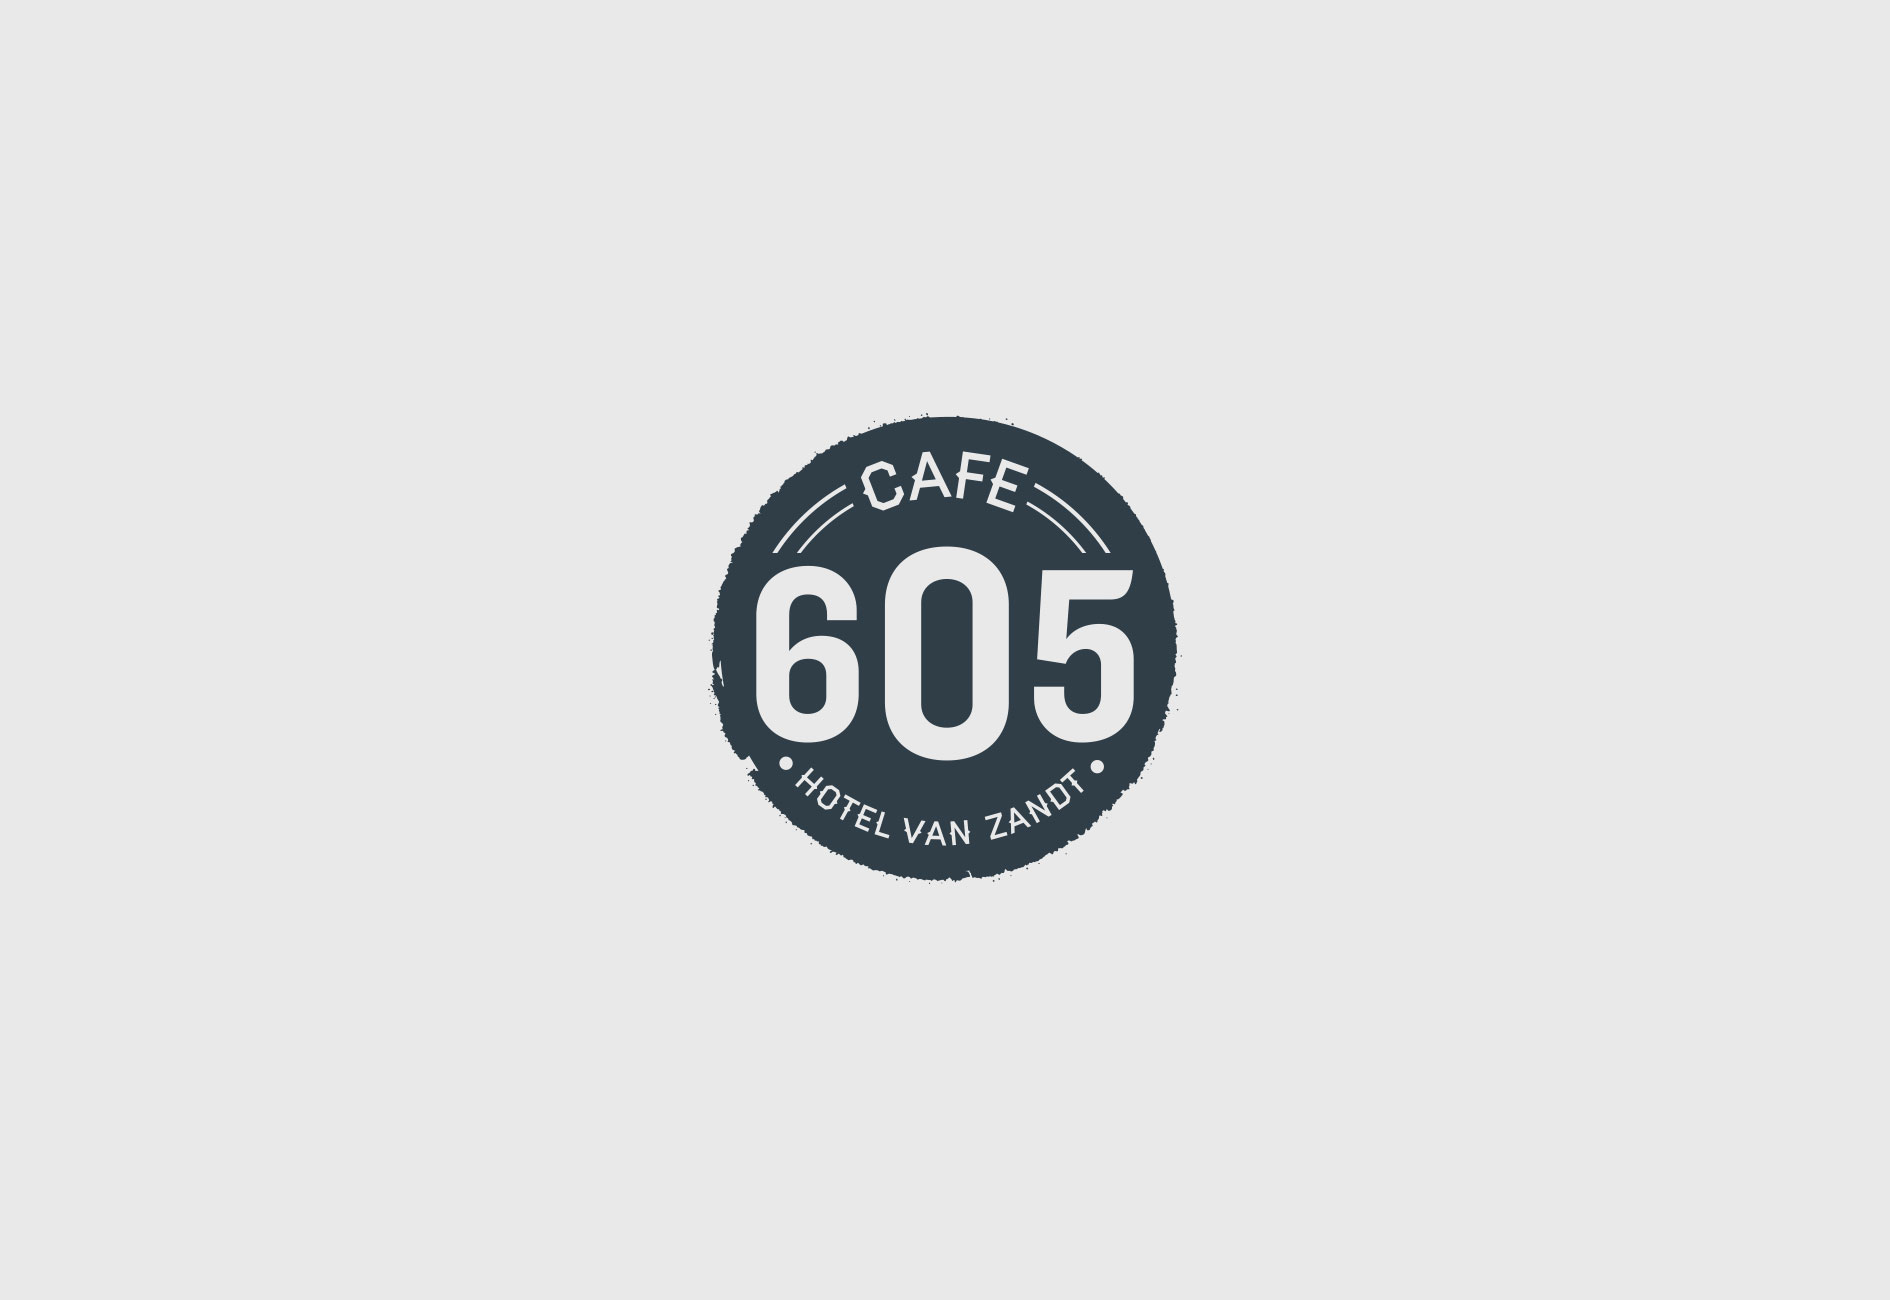 CAFE 605 BRANDING by Mark Zeff Design